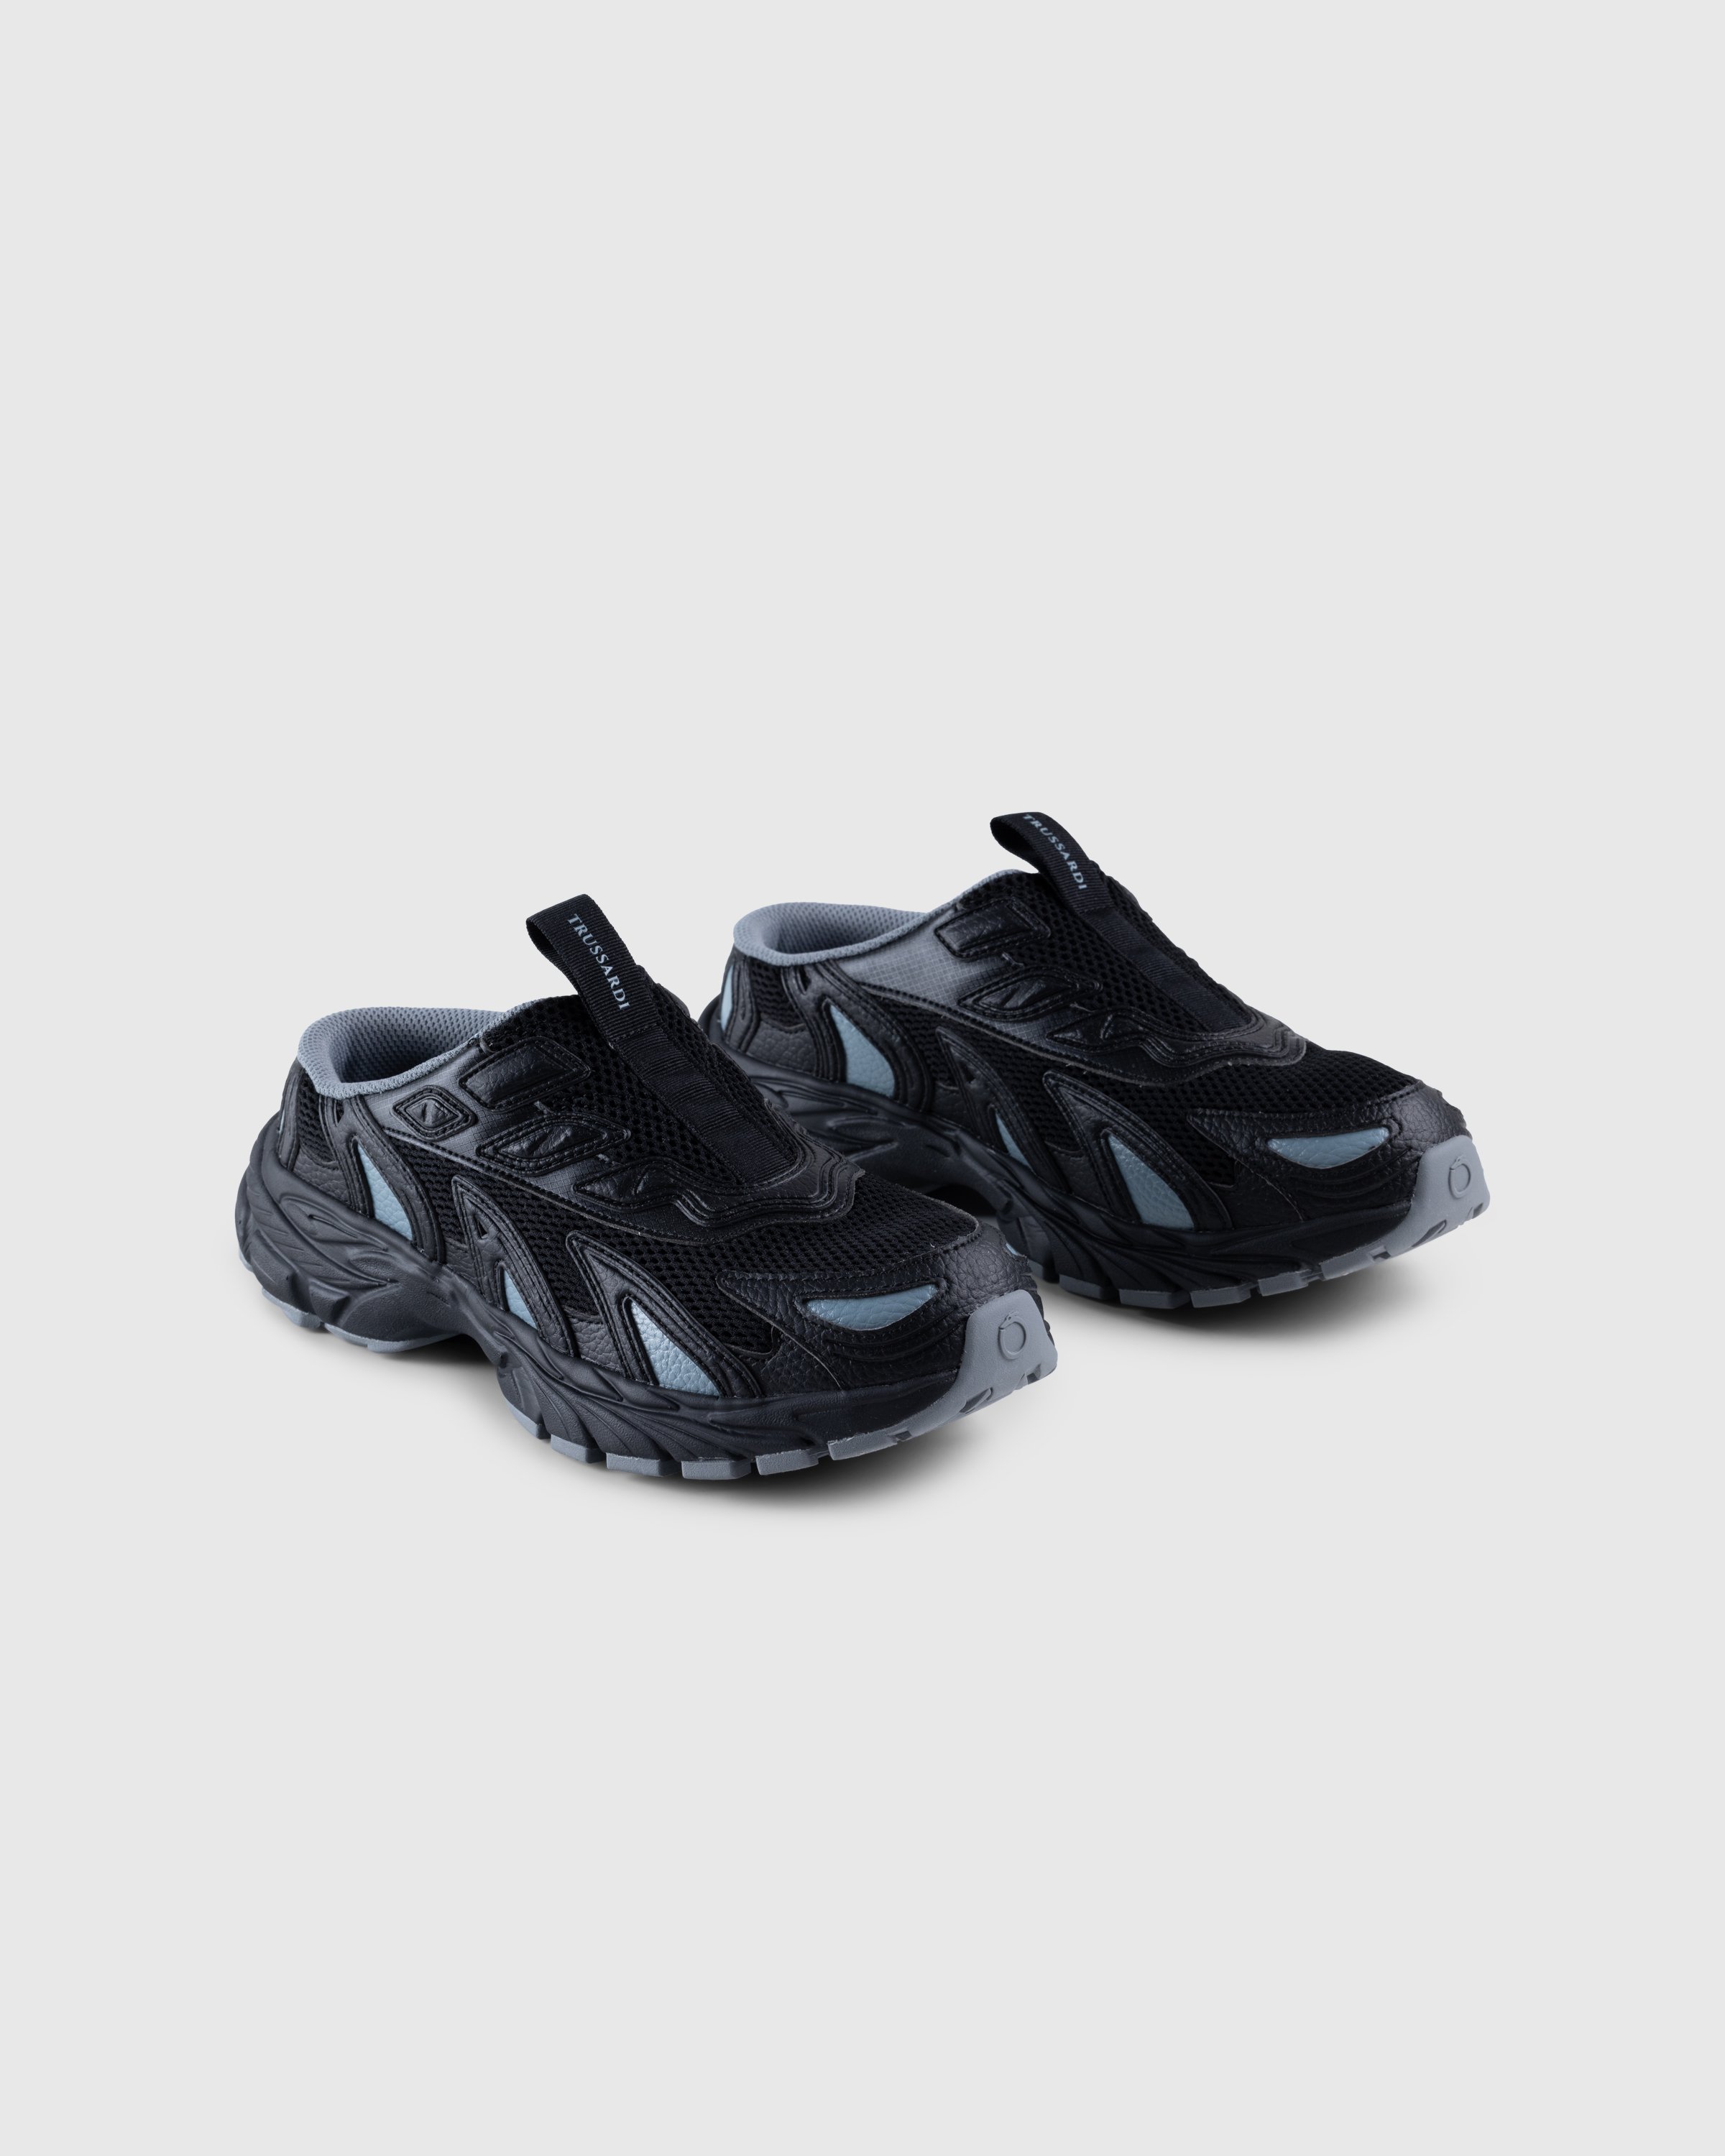 Trussardi – Retro Mule Sneaker | Highsnobiety Shop